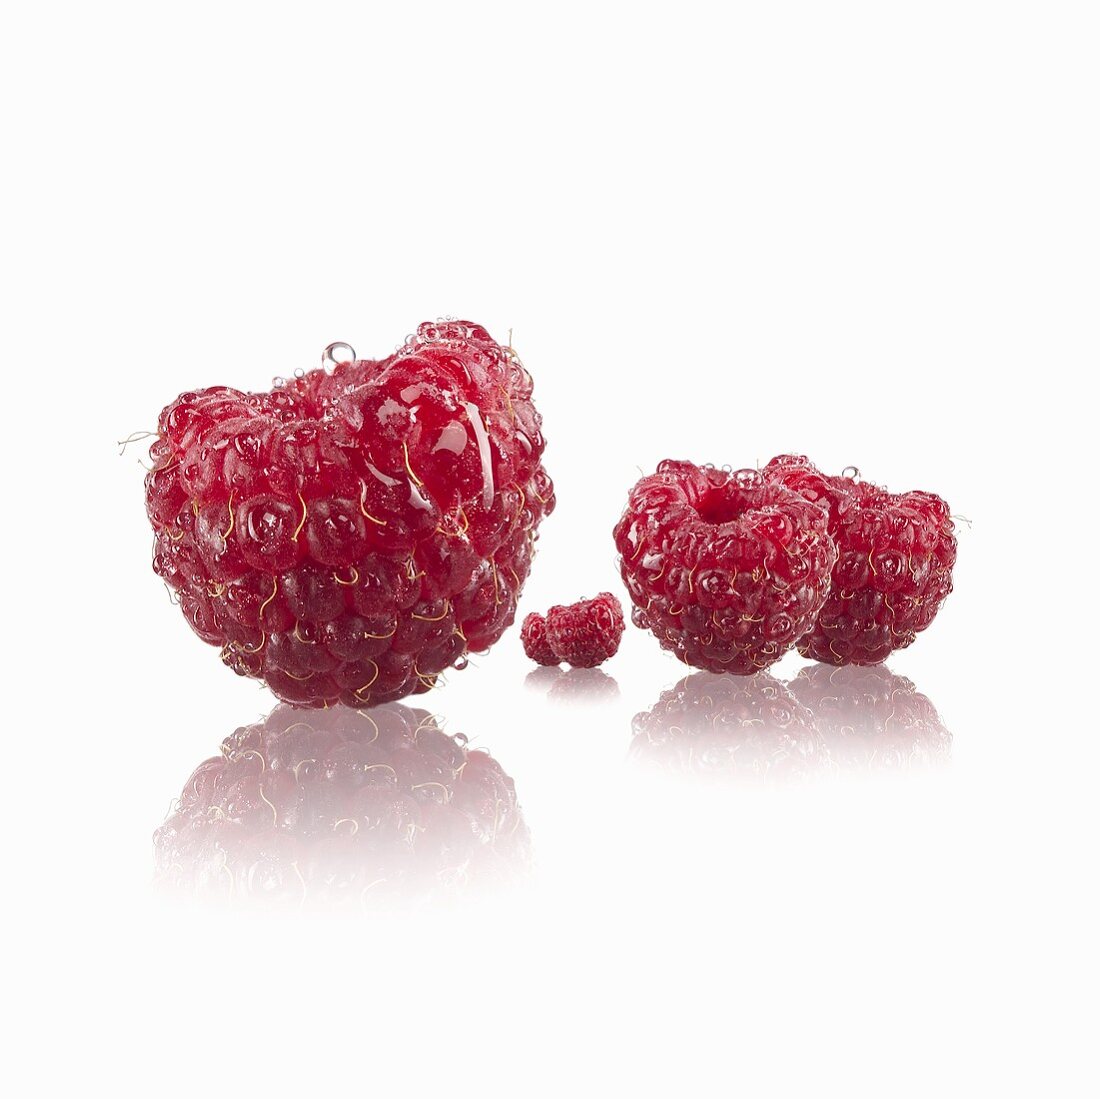 Five raspberries